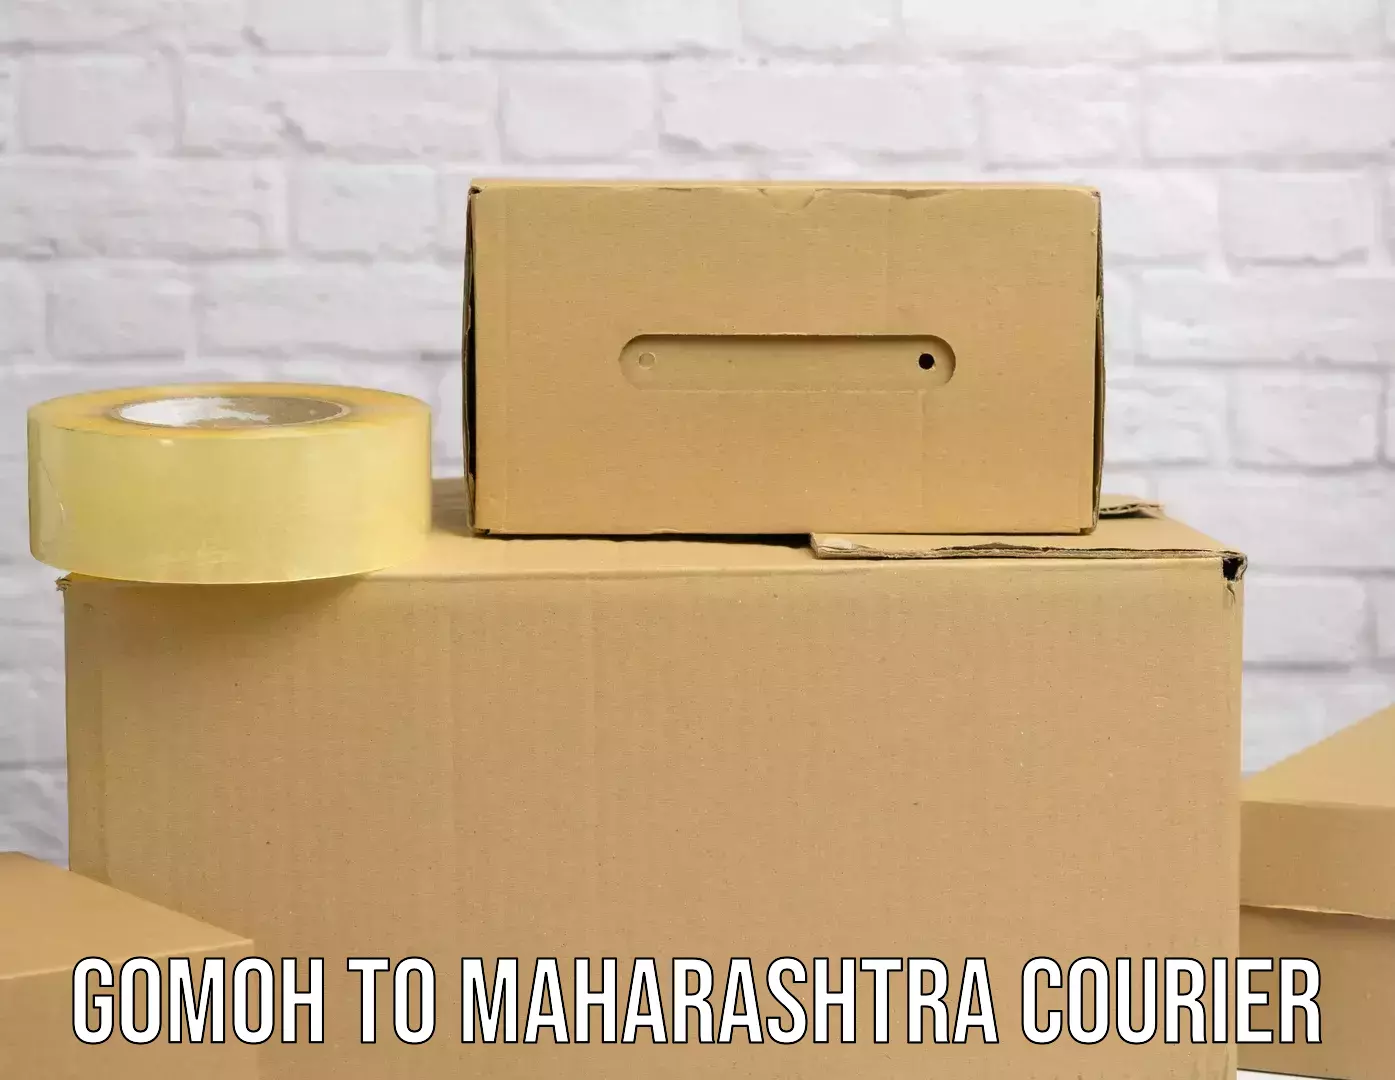 Efficient order fulfillment Gomoh to Maharashtra